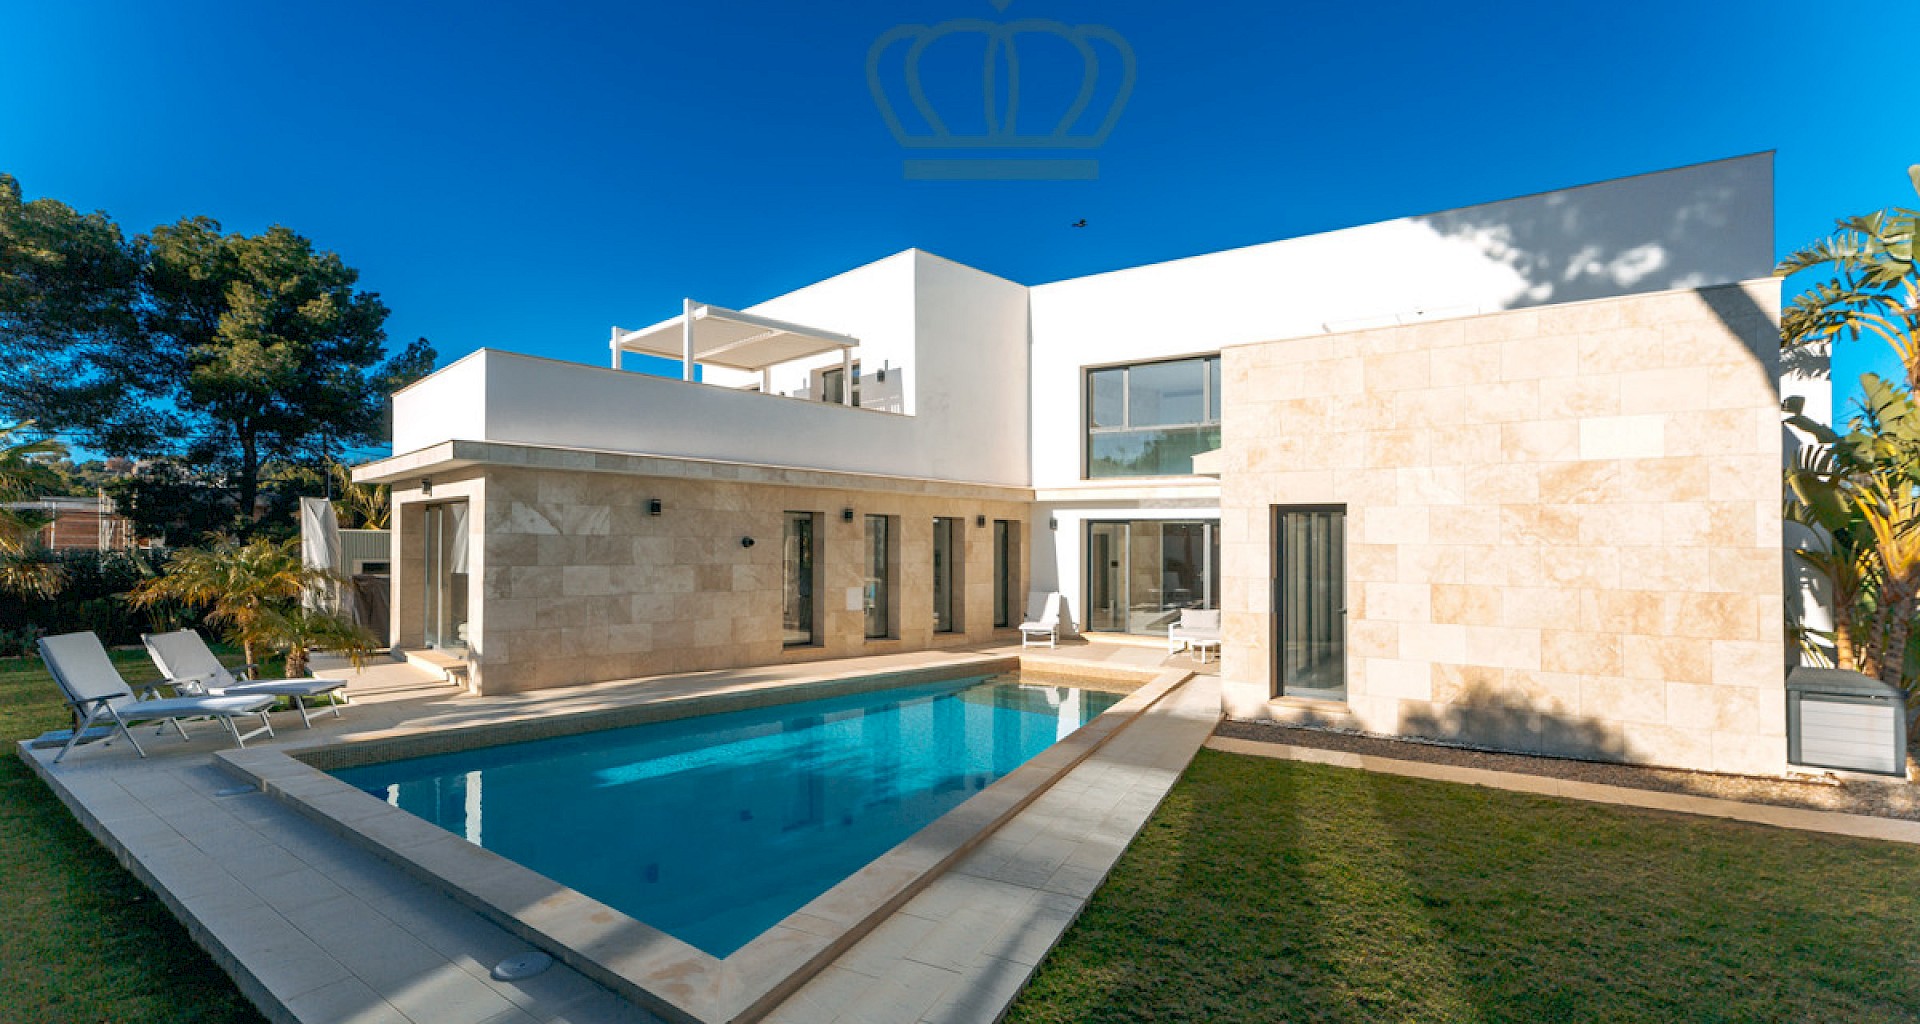 KROHN & LUEDEMANN Large modern villa in Santa Ponsa with pool for sale Grosse Villa in Santa Ponsa 01